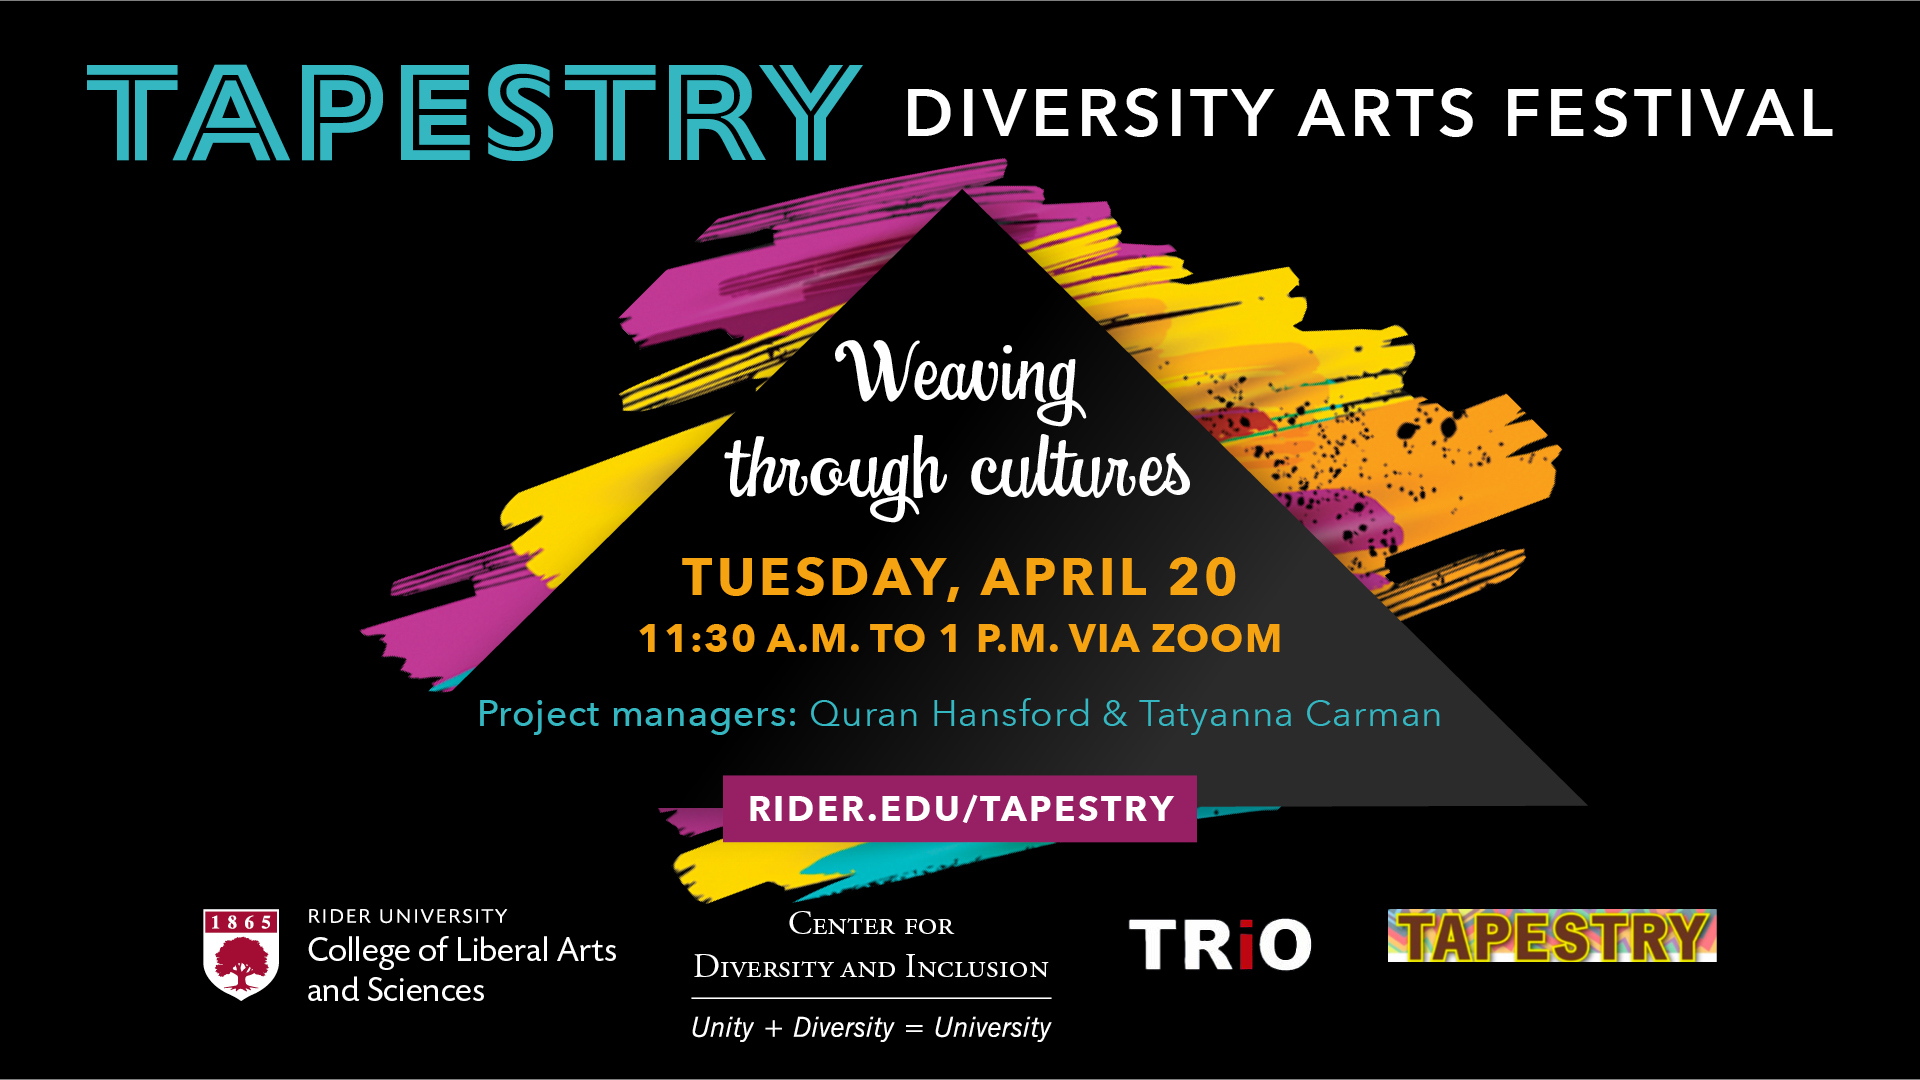 Tapestry’s Diversity Arts Festival